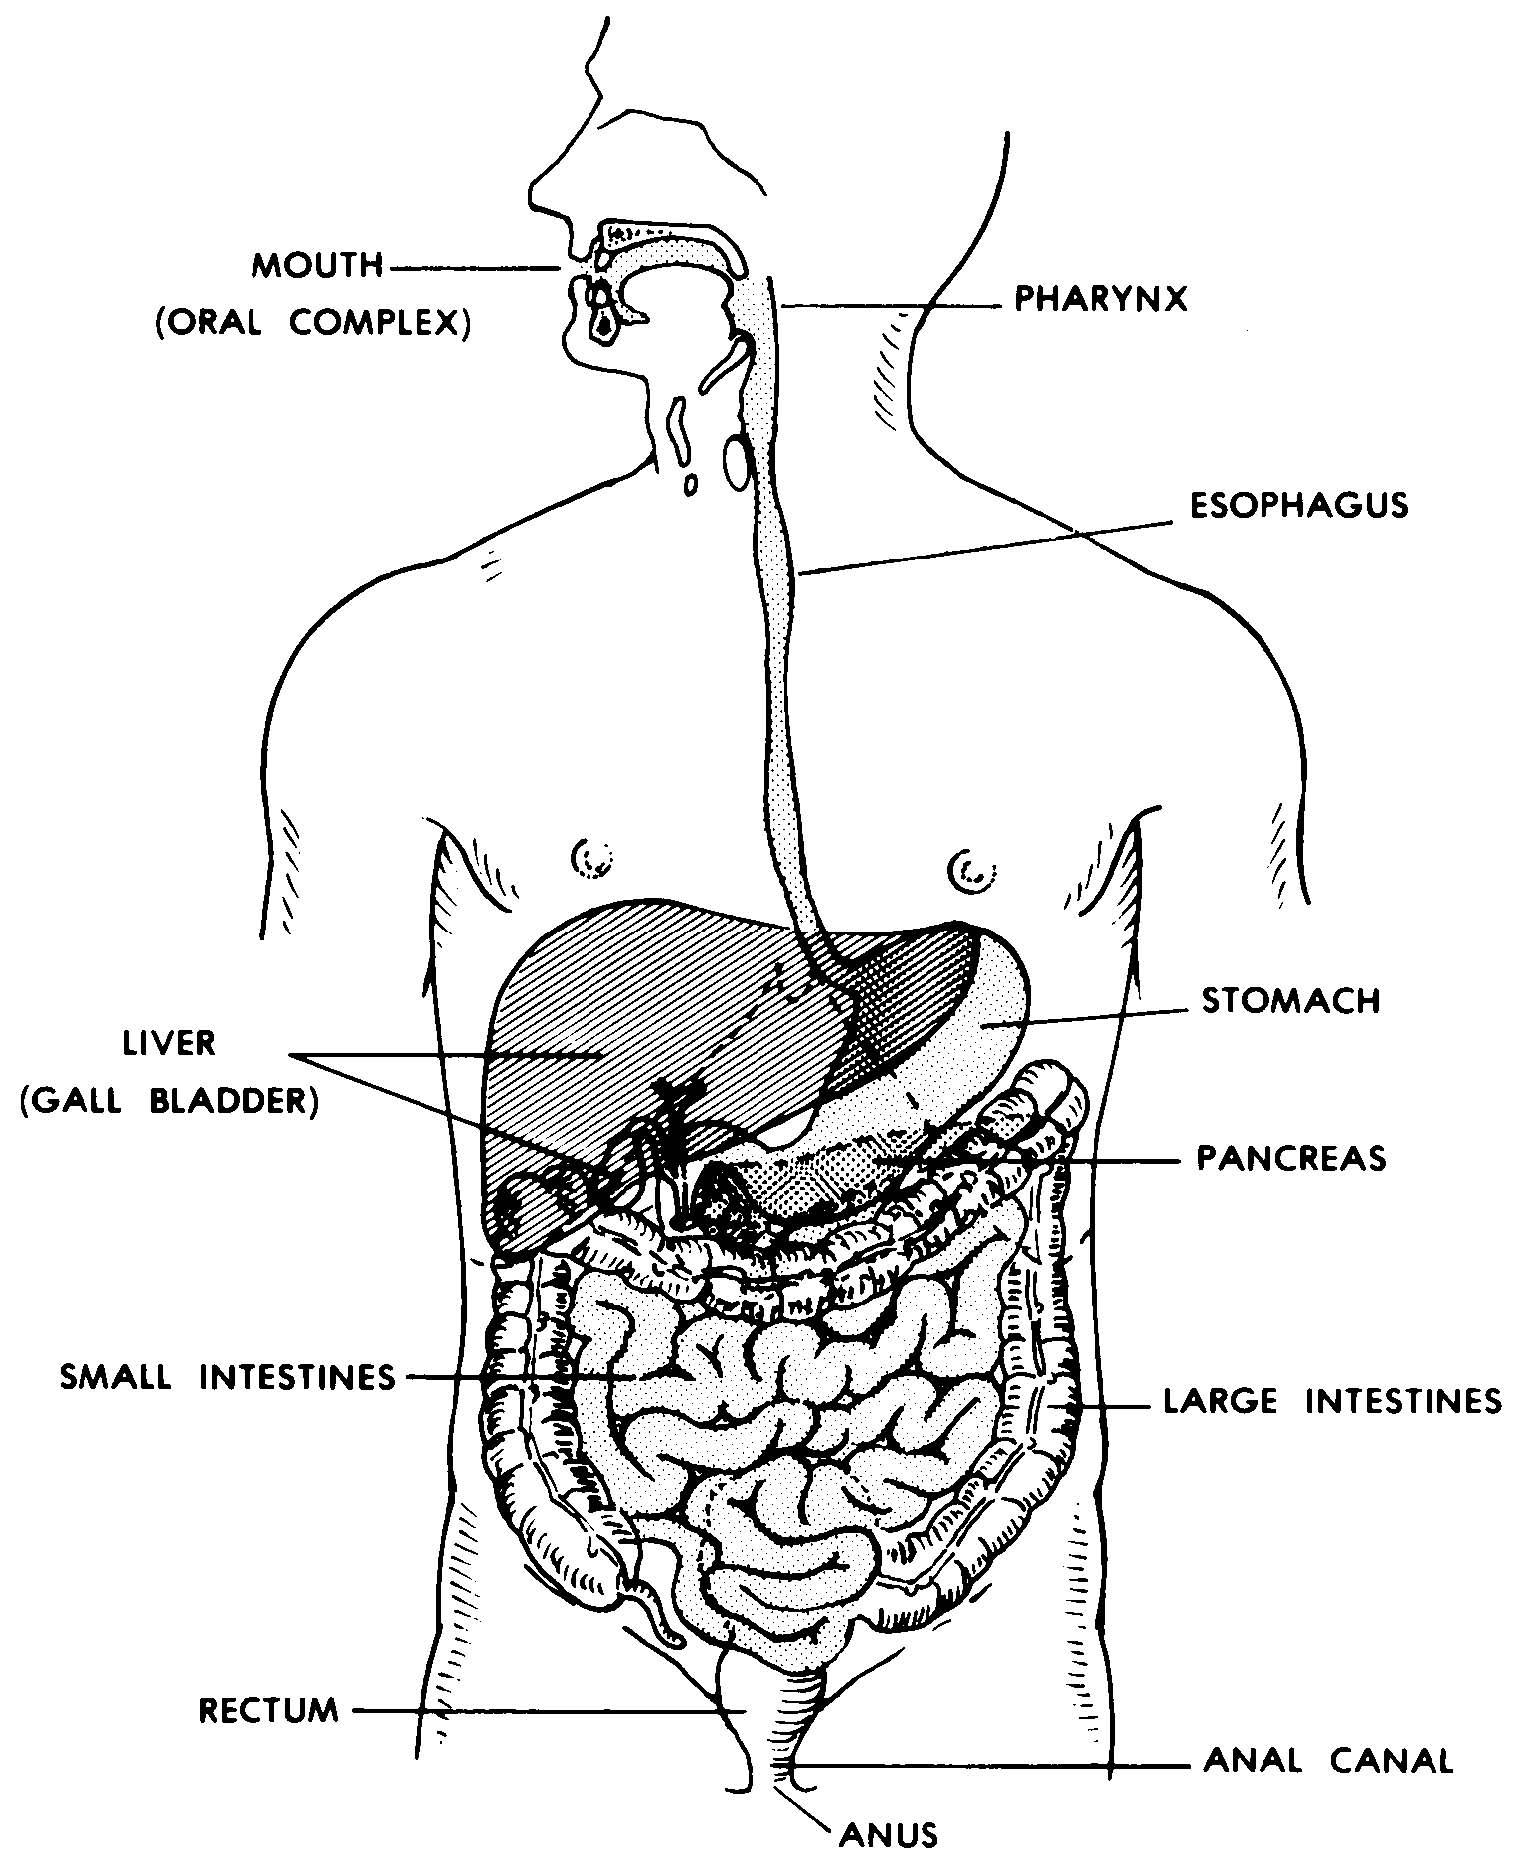 [DIAGRAM] Biology Diagram Human Digestive System - MYDIAGRAM.ONLINE